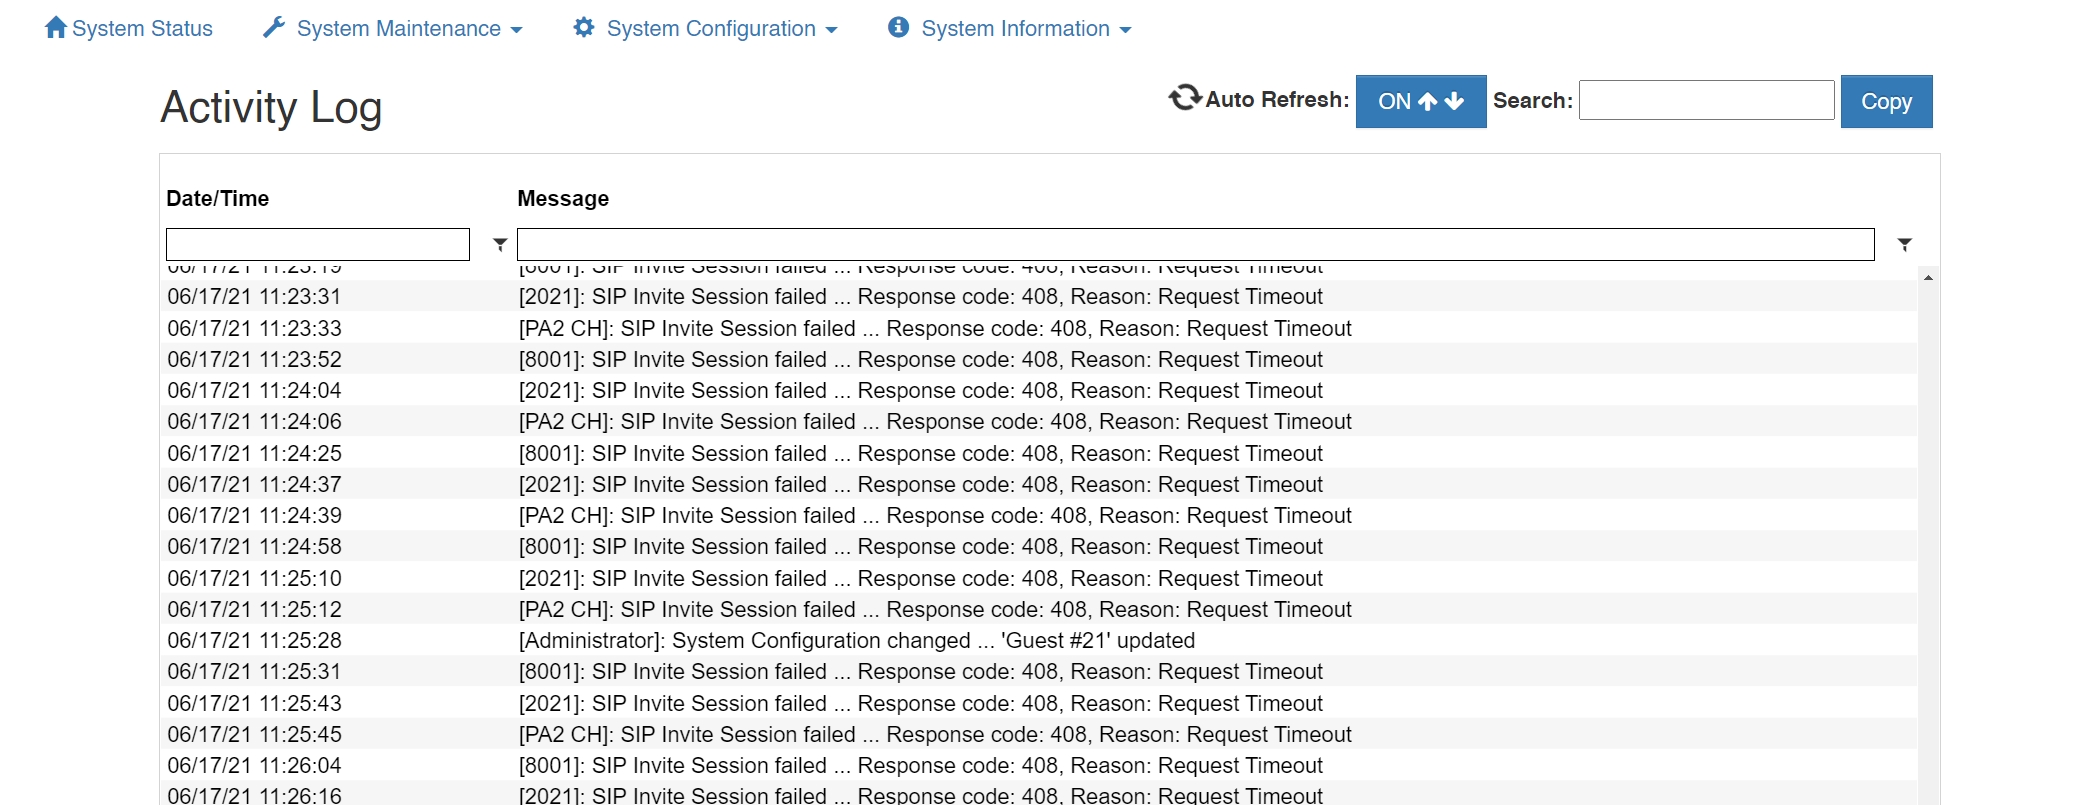 screenshot of vcom system administration activity log